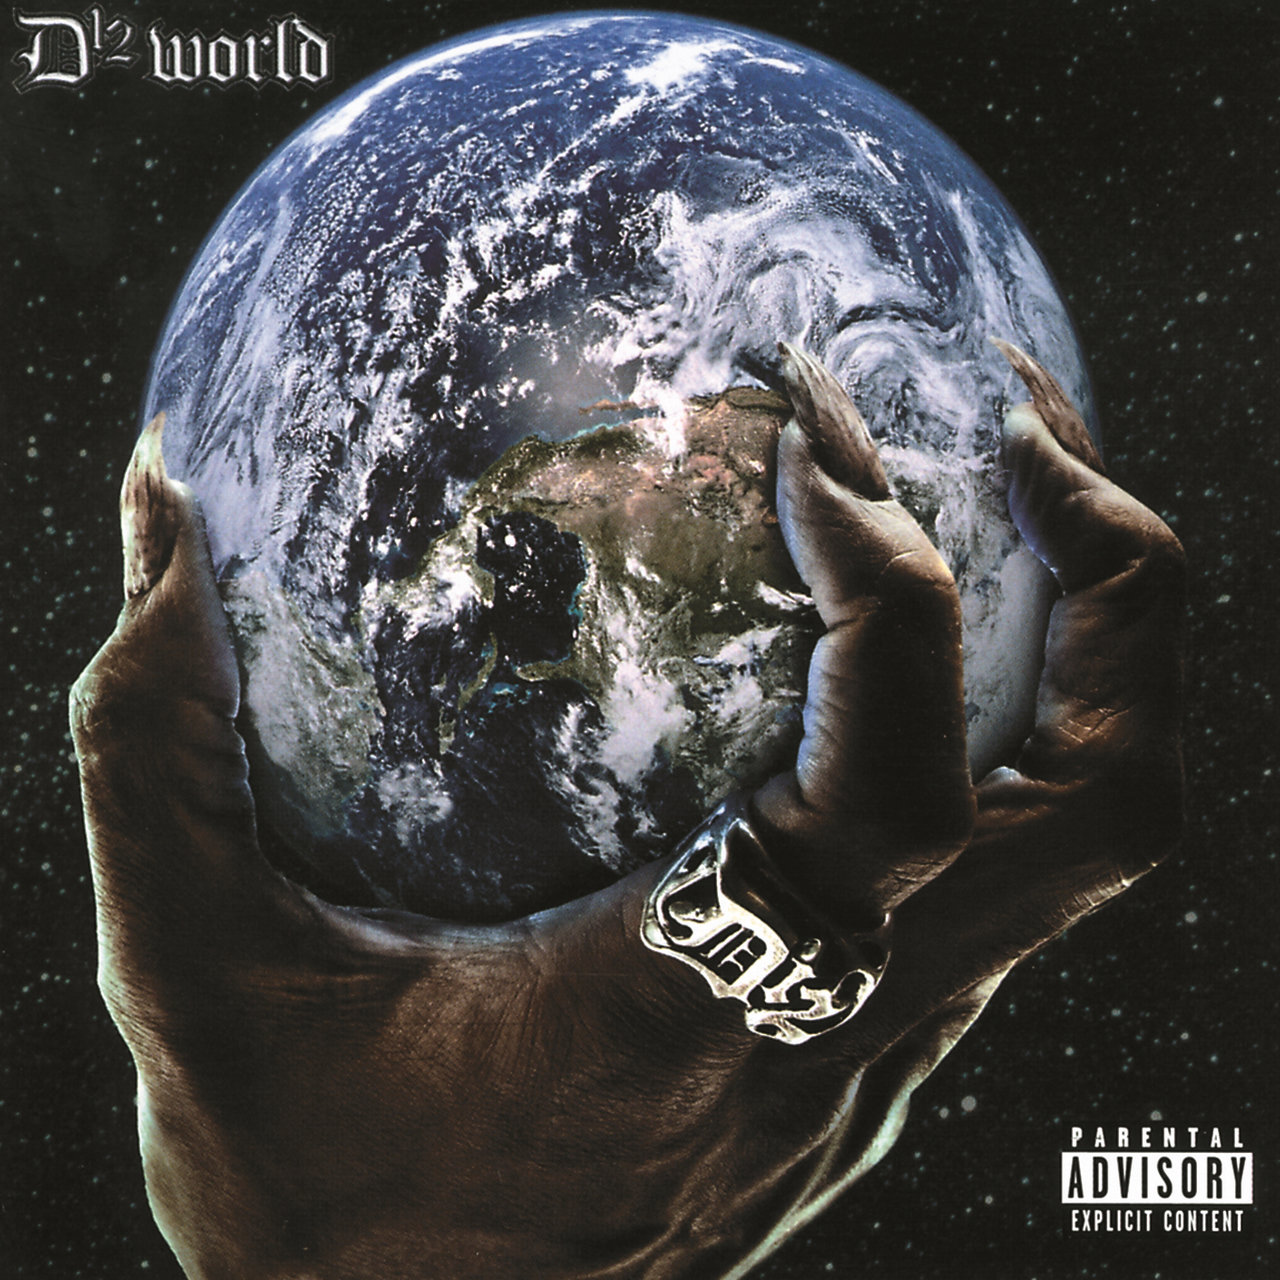 D12 - D12 World (Cover)